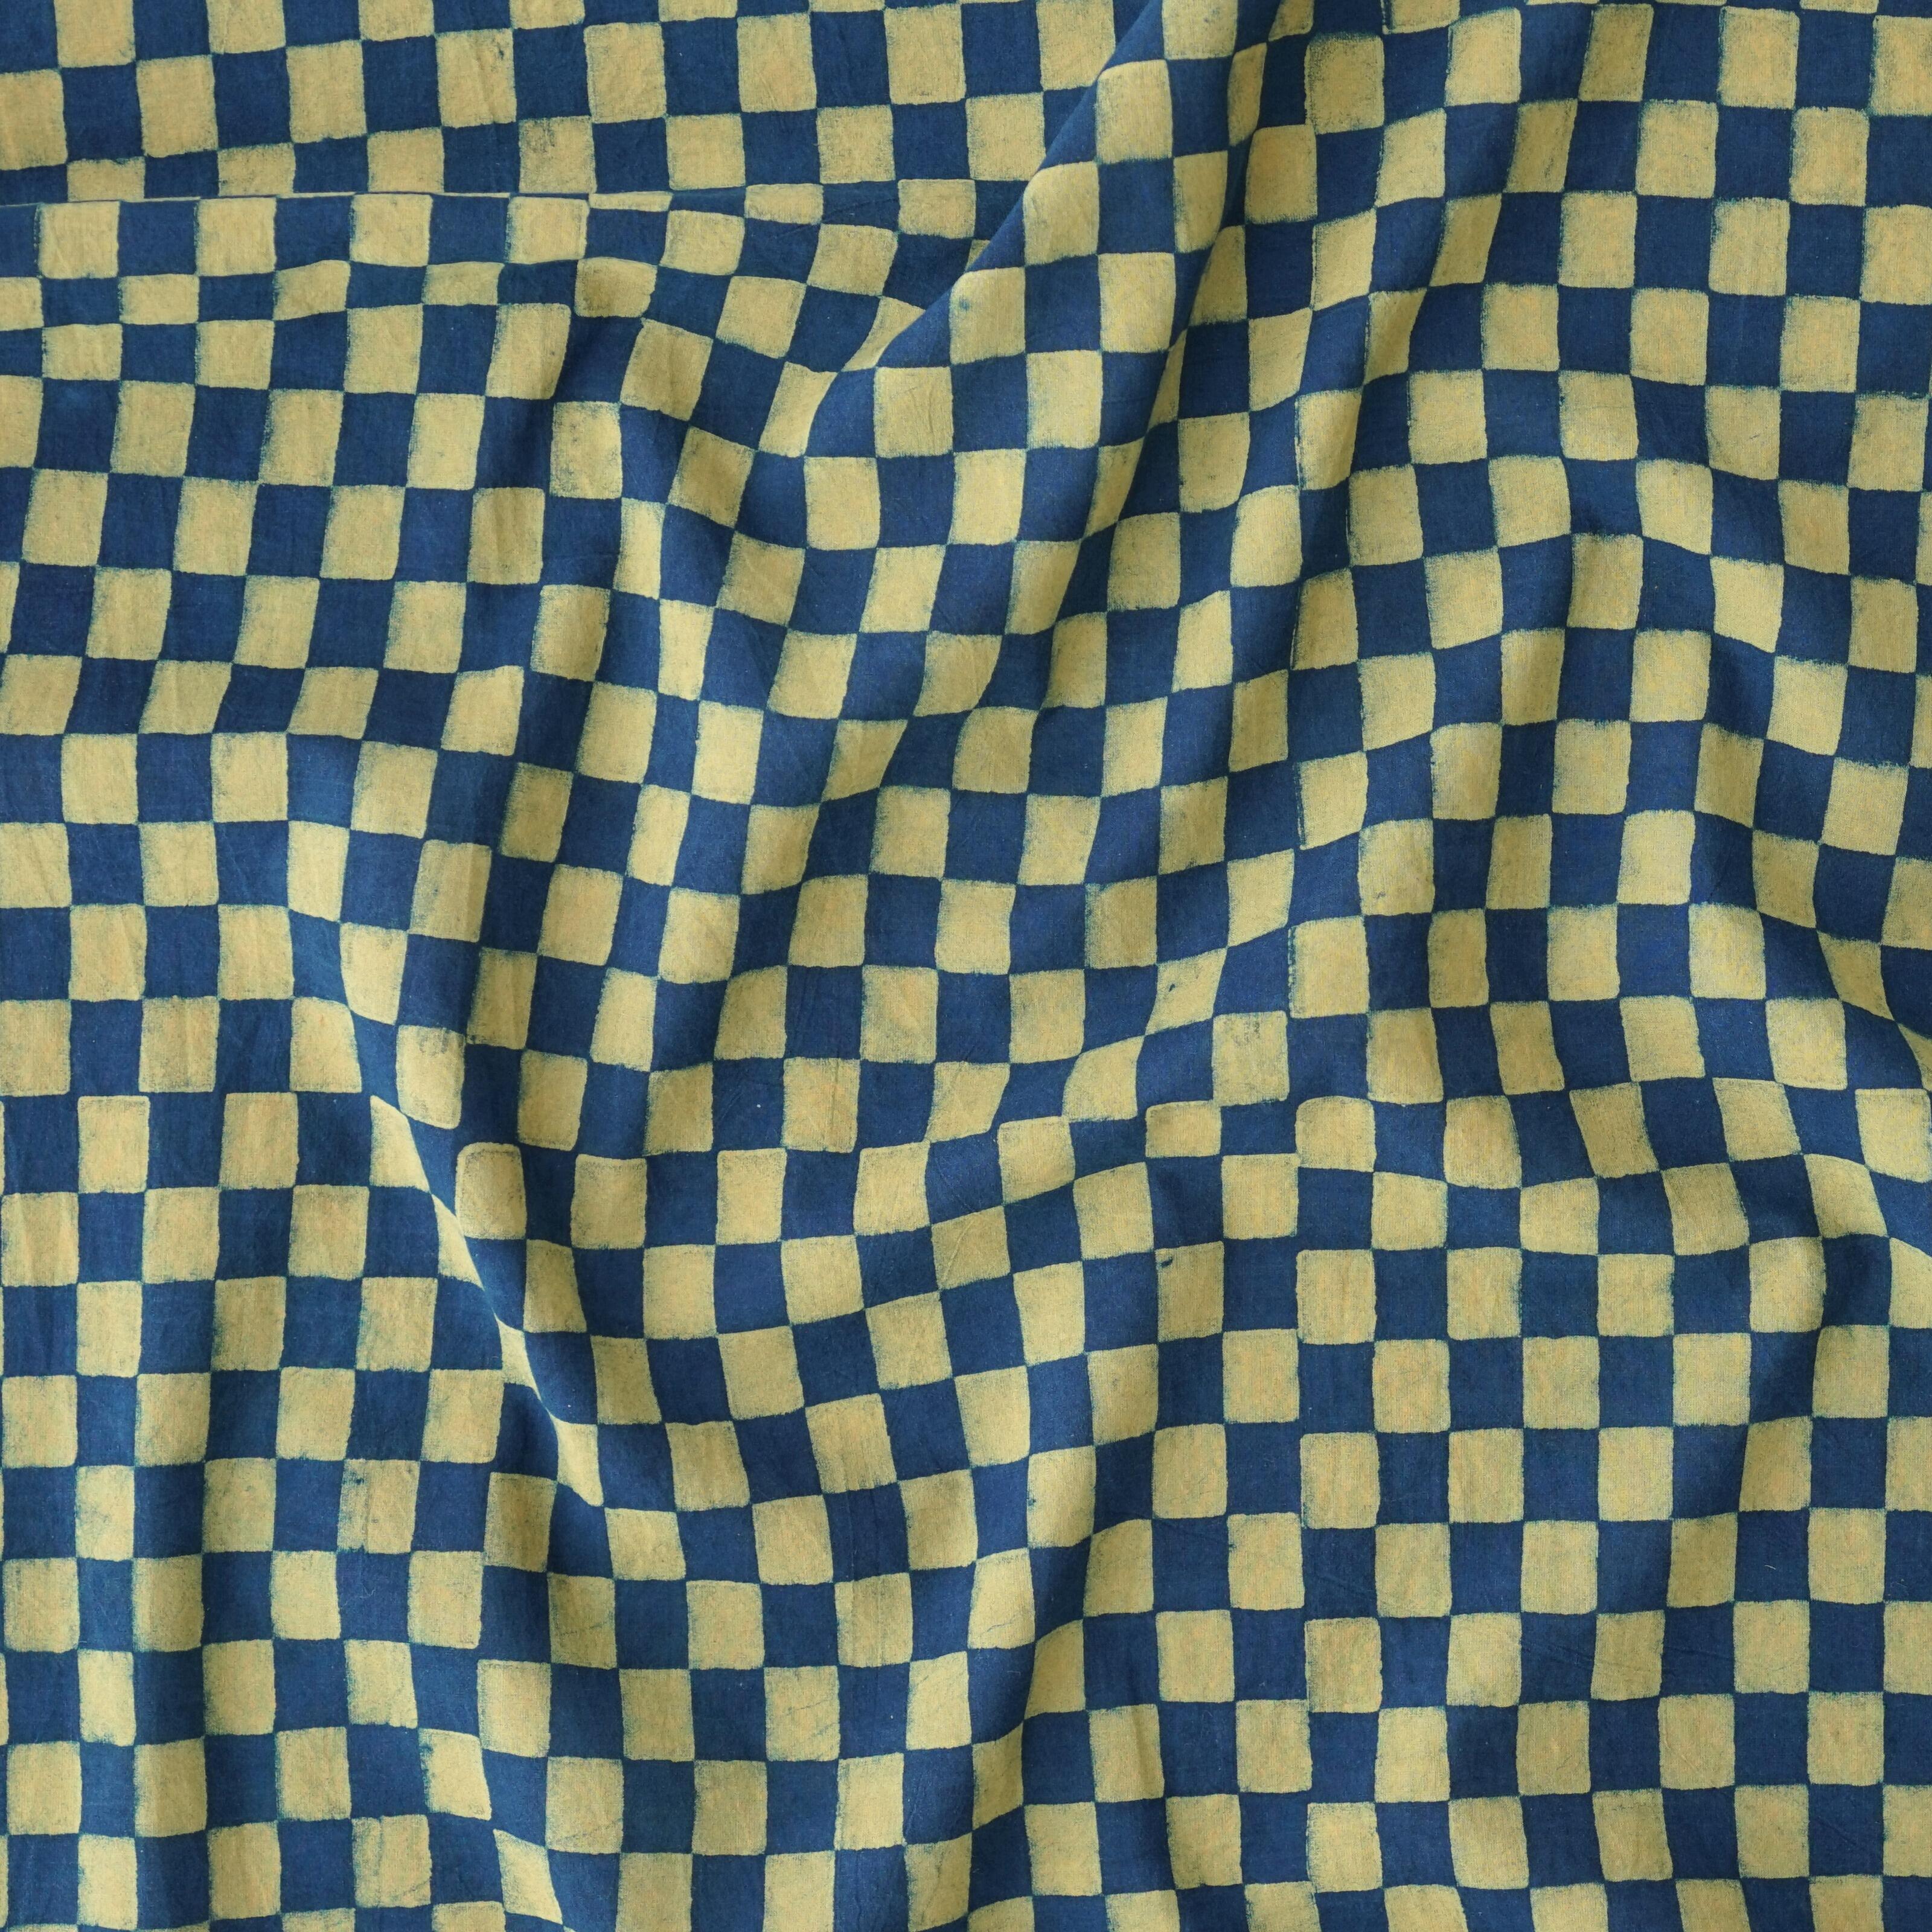 1 - AHM56 - Block-Printed Fabric - Checkerboard - Indigo & Tamarisk Yellow Dyes - Contrast